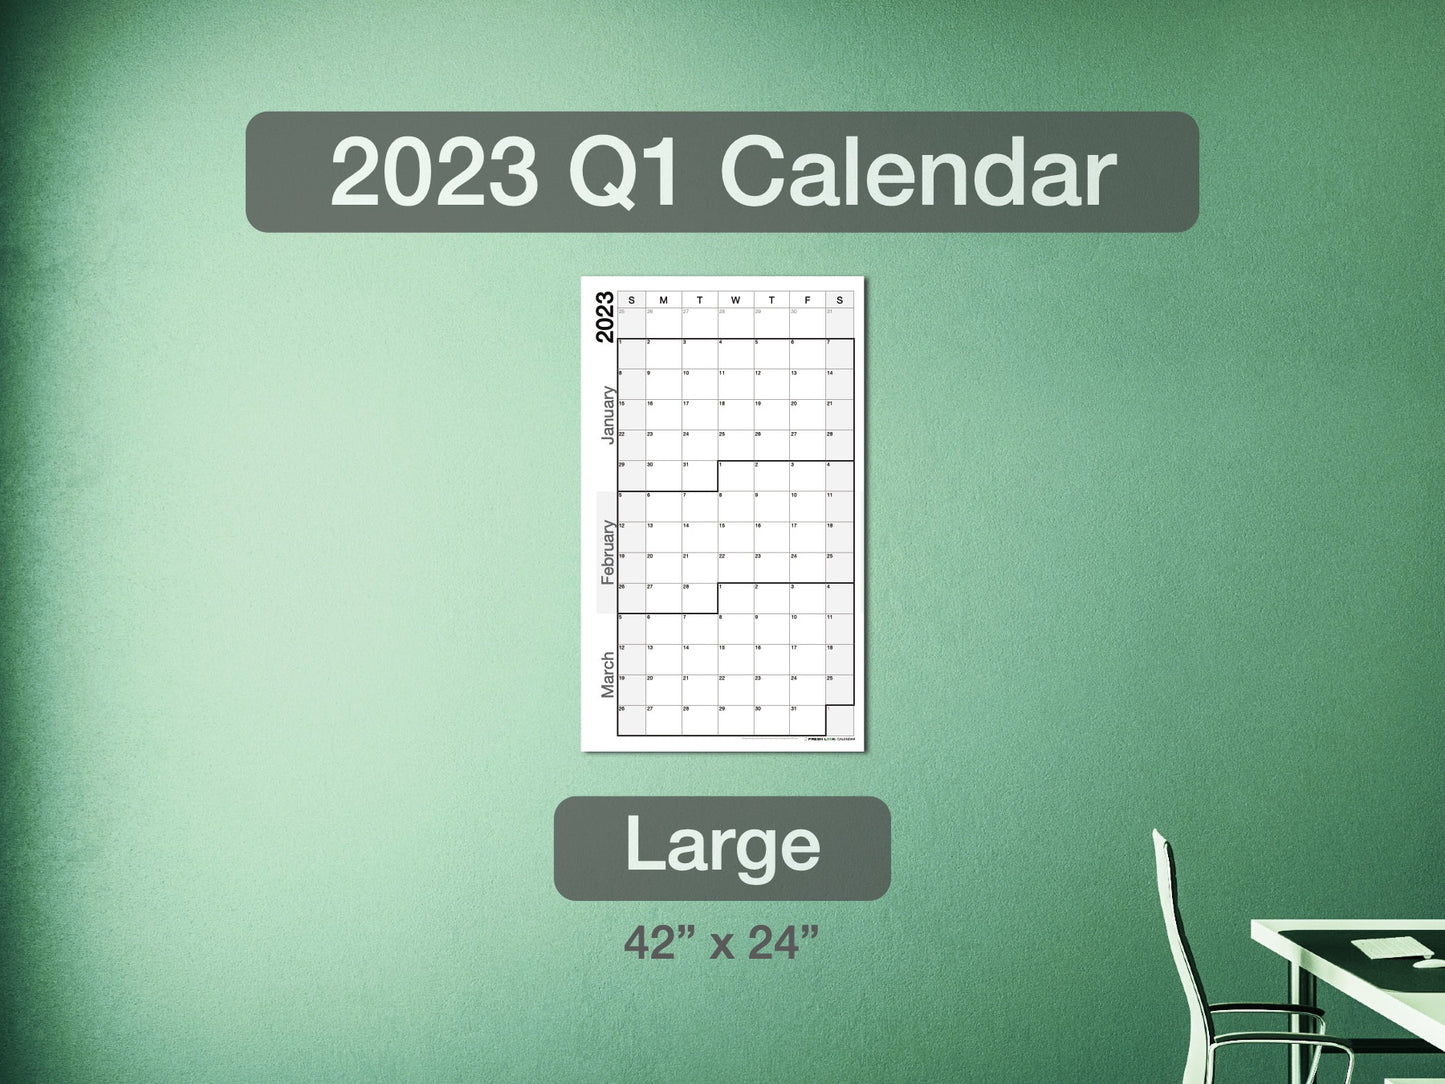 2023 Q1 Calendar Large